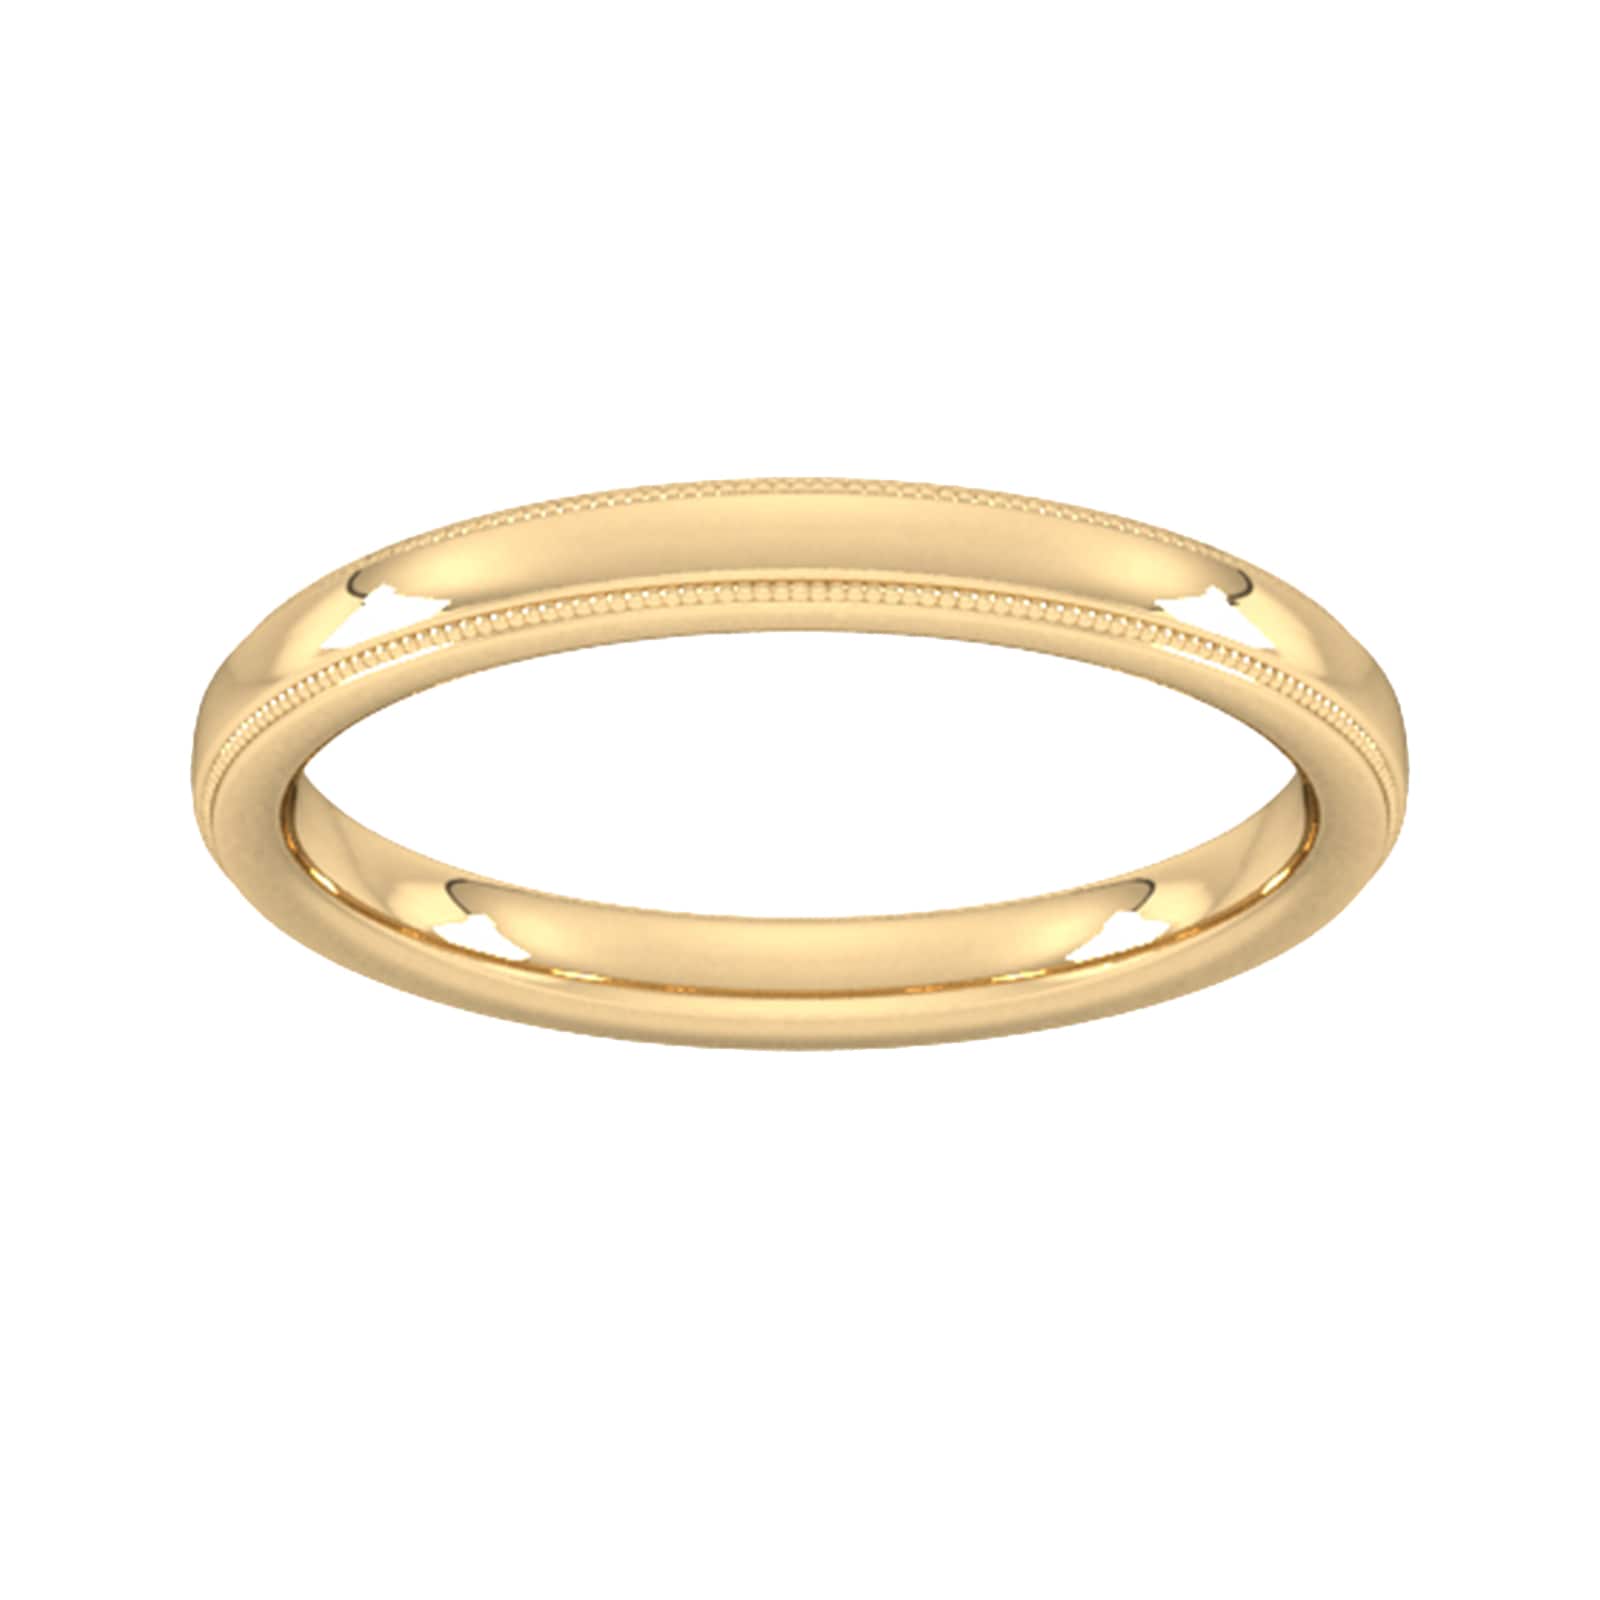 2.5mm Slight Court Heavy Milgrain Edge Wedding Ring In 18 Carat Yellow Gold - Ring Size Q